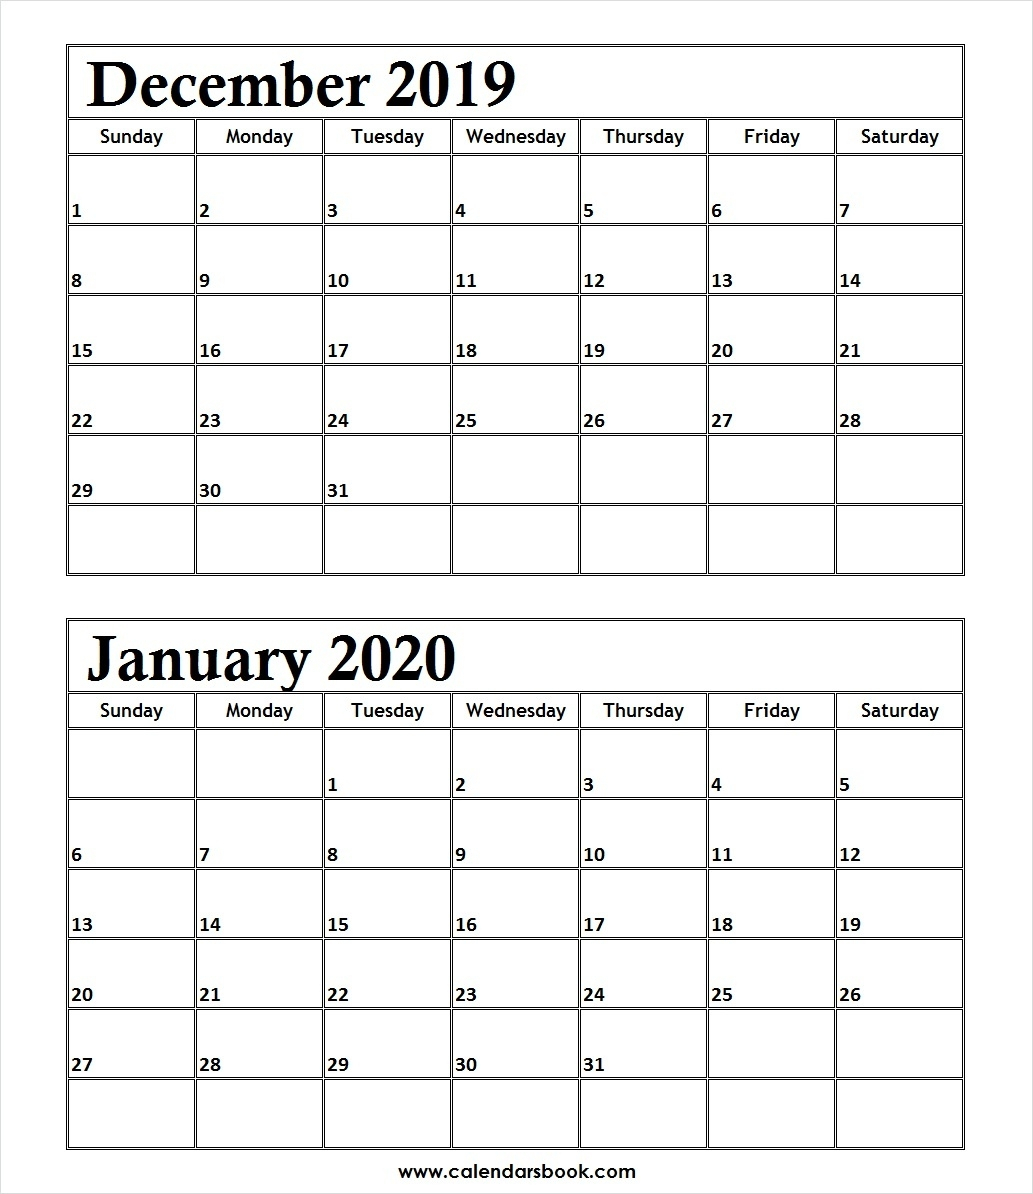 Printable Calendar December 2019 And January 2020 | Calendar